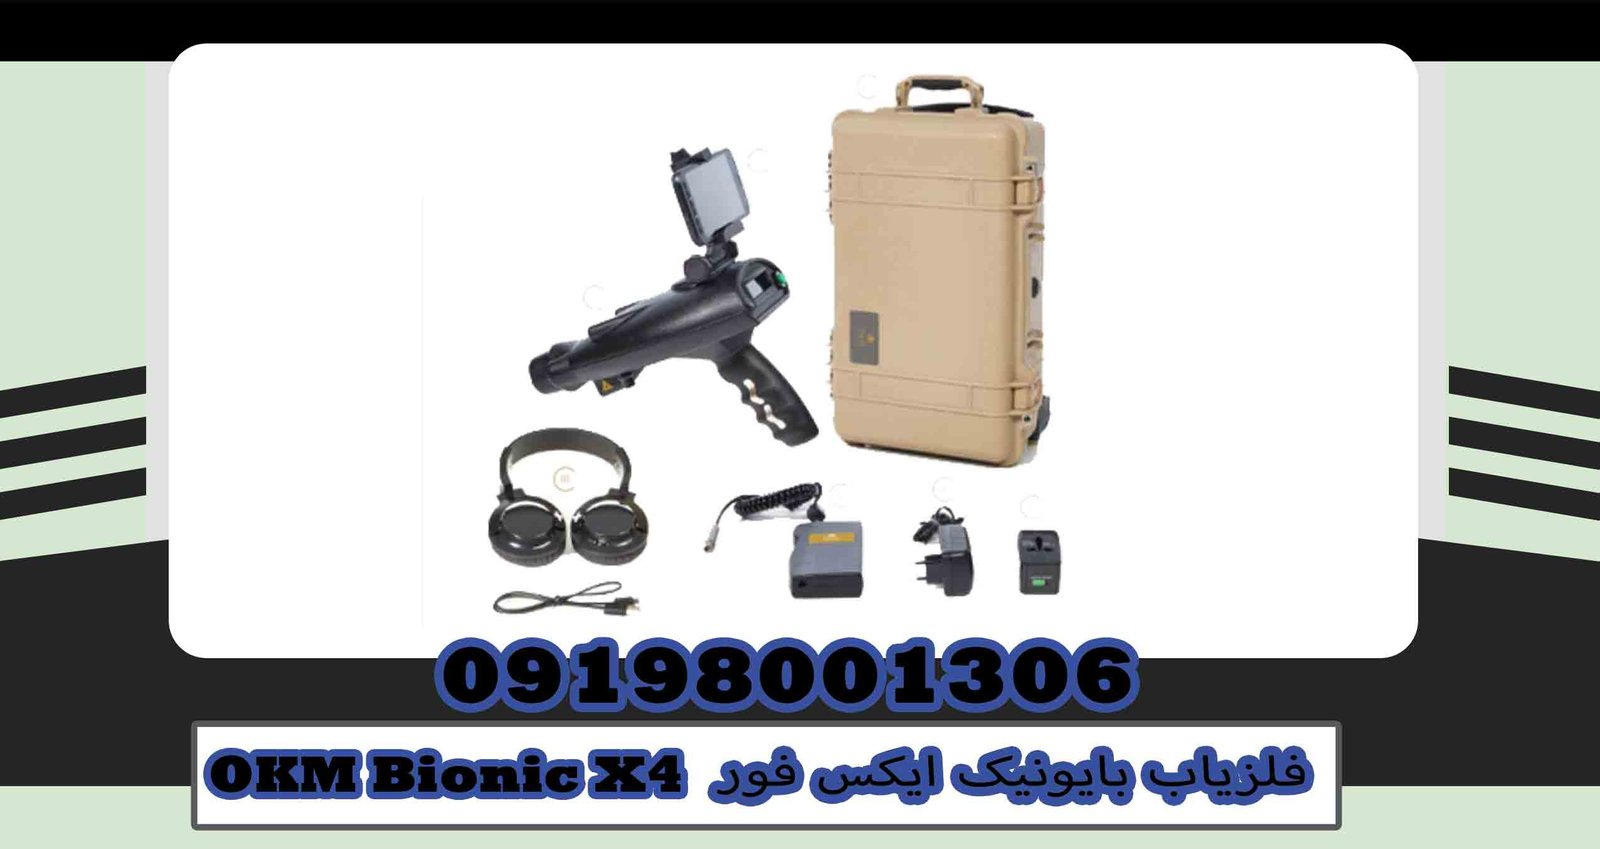 Buy OKM Bionic X4 metal detector